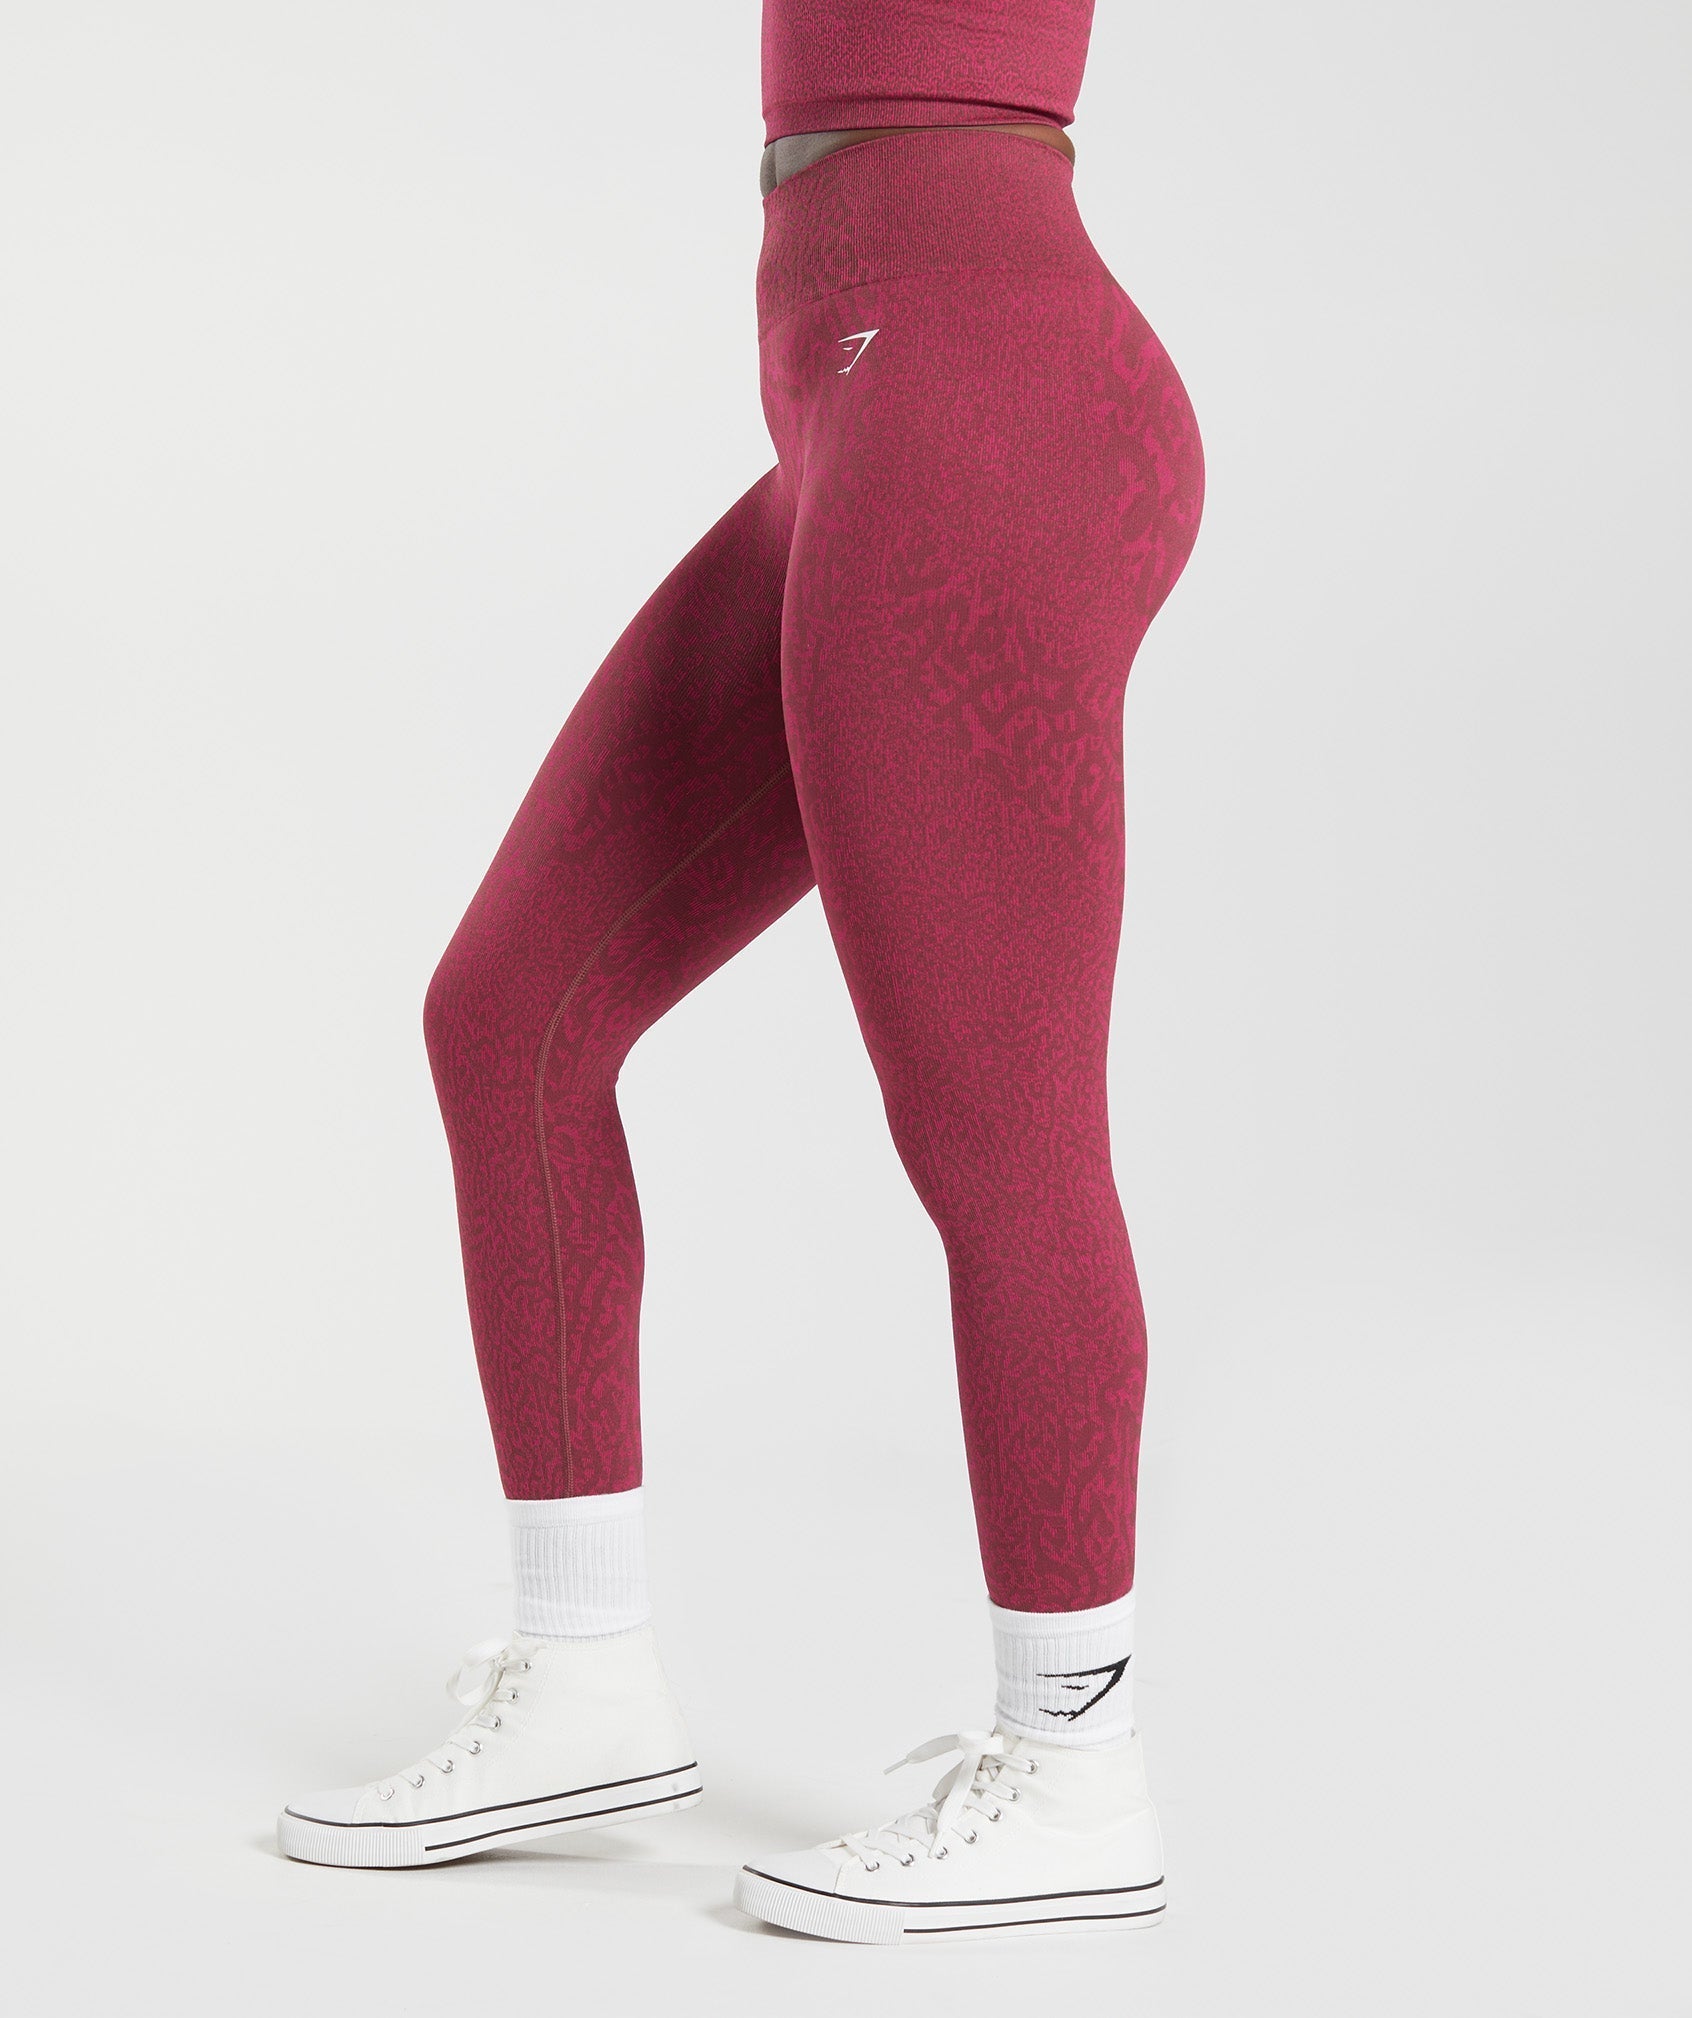 GymShark Women's Athletic TRAINING LEGGINGS Cherry Brown Medium